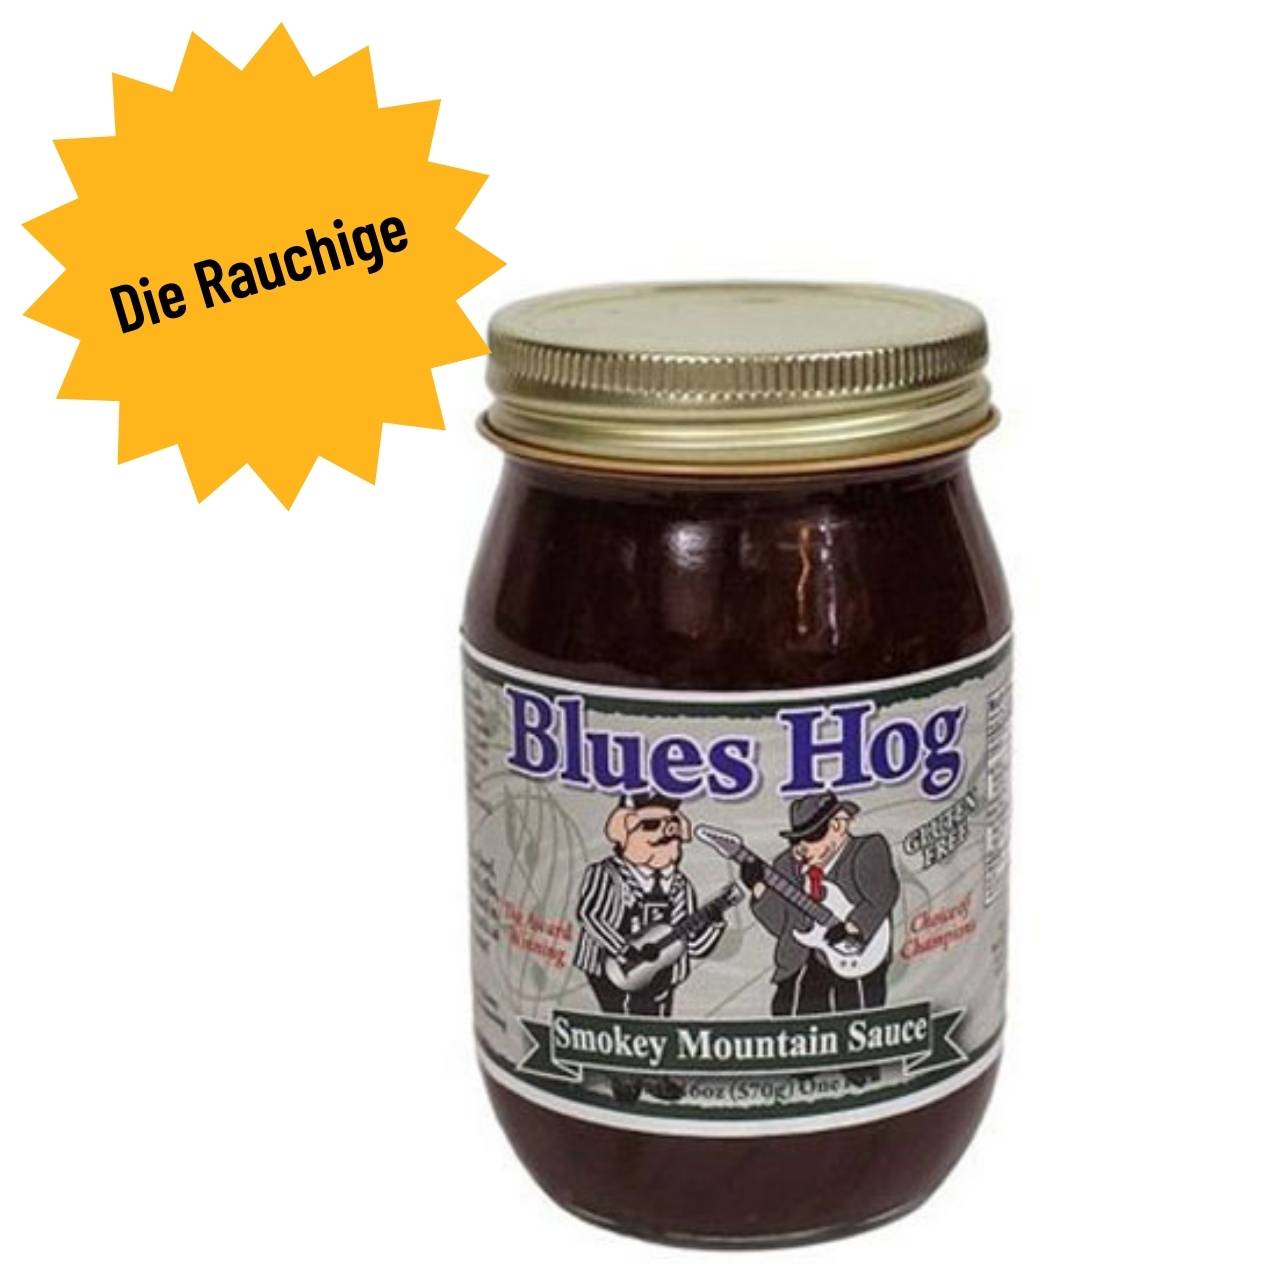 Blues Hog - Smokey Mountain Sauce, 570 g